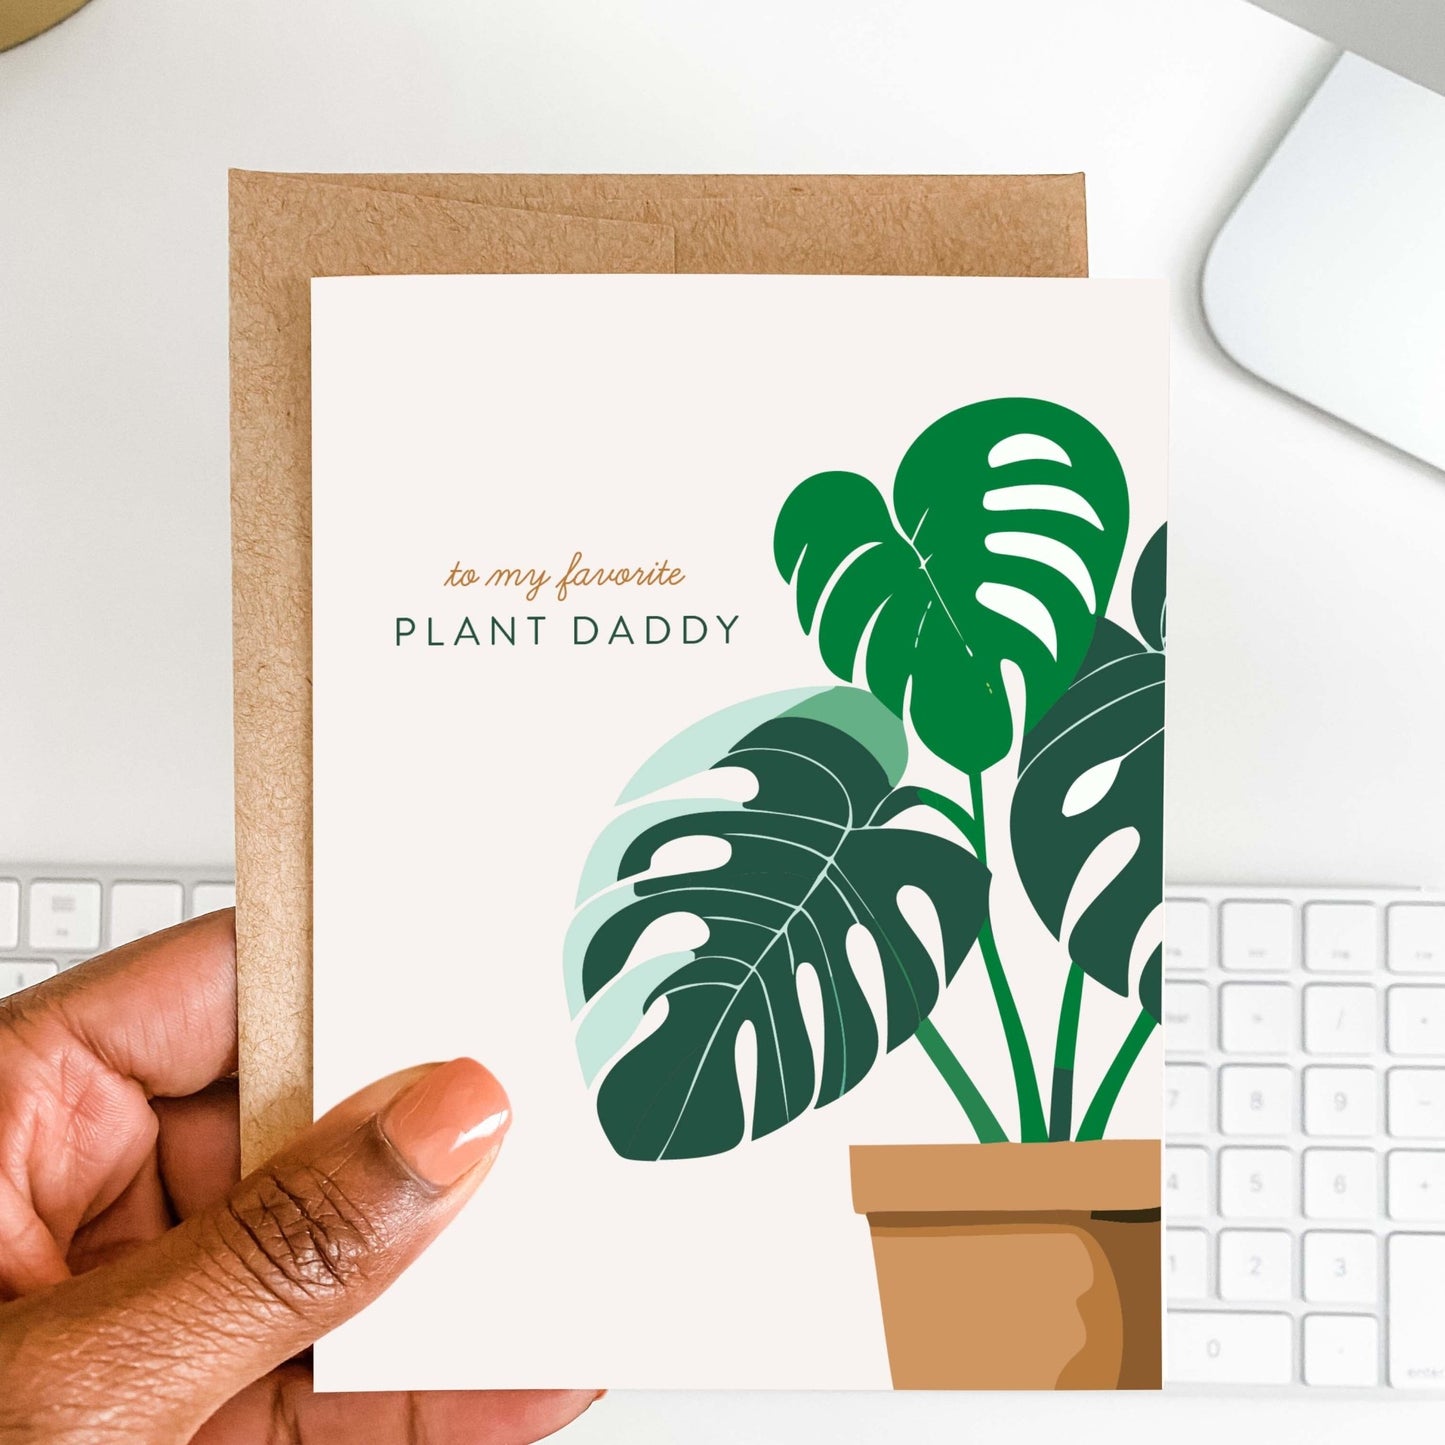 Plant Daddy Greeting Card - Blú Rose